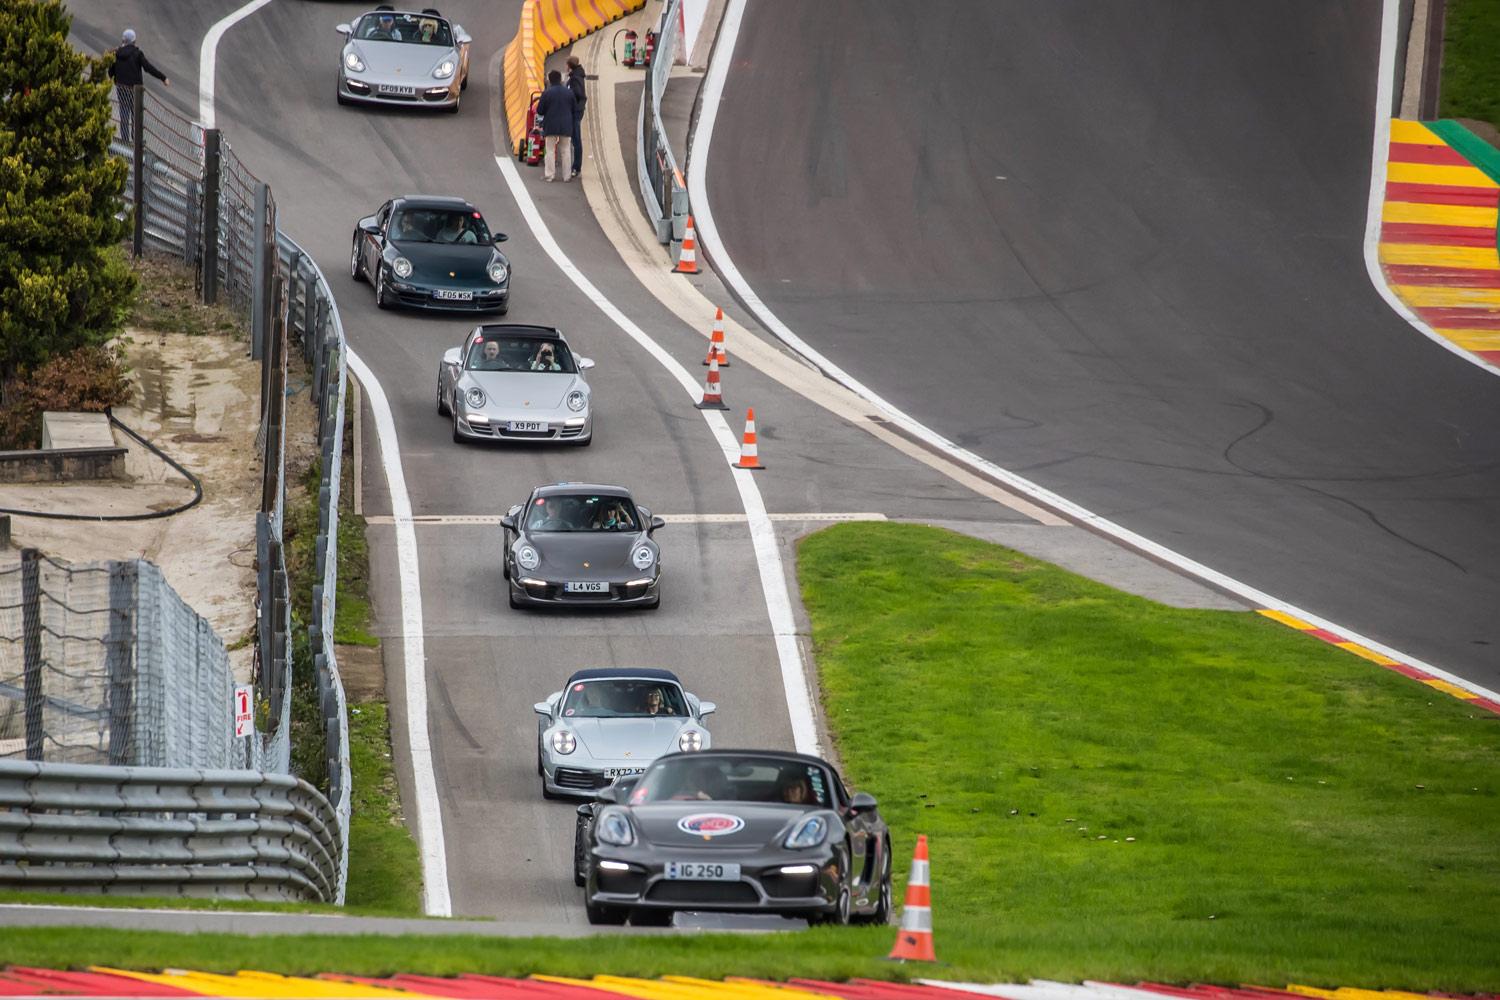 A group of six Porsches entering a racetrack.